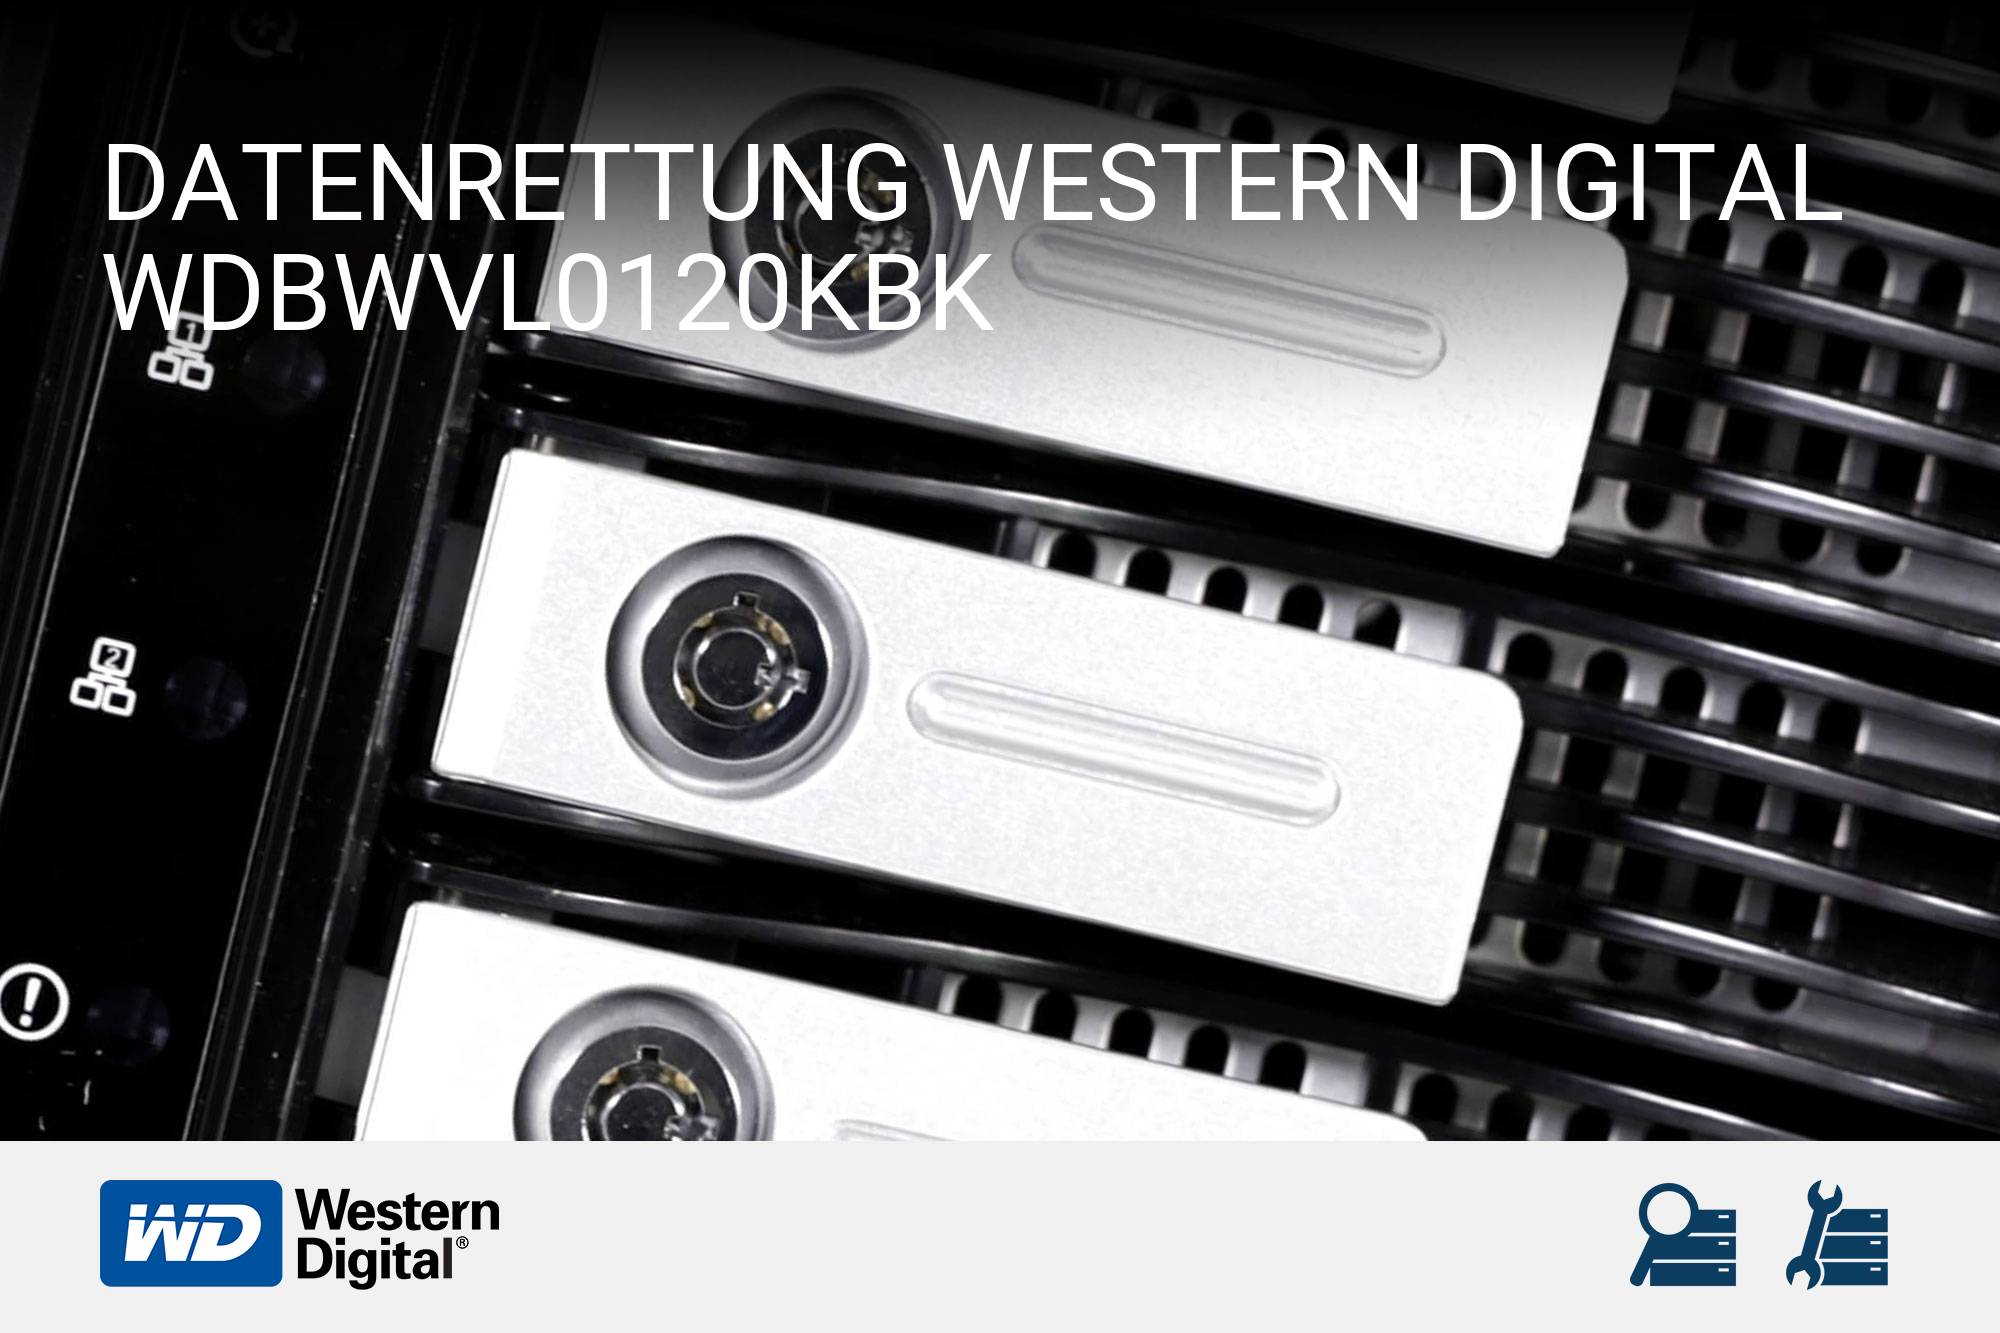 Western Digital WDBWVL0120KBK